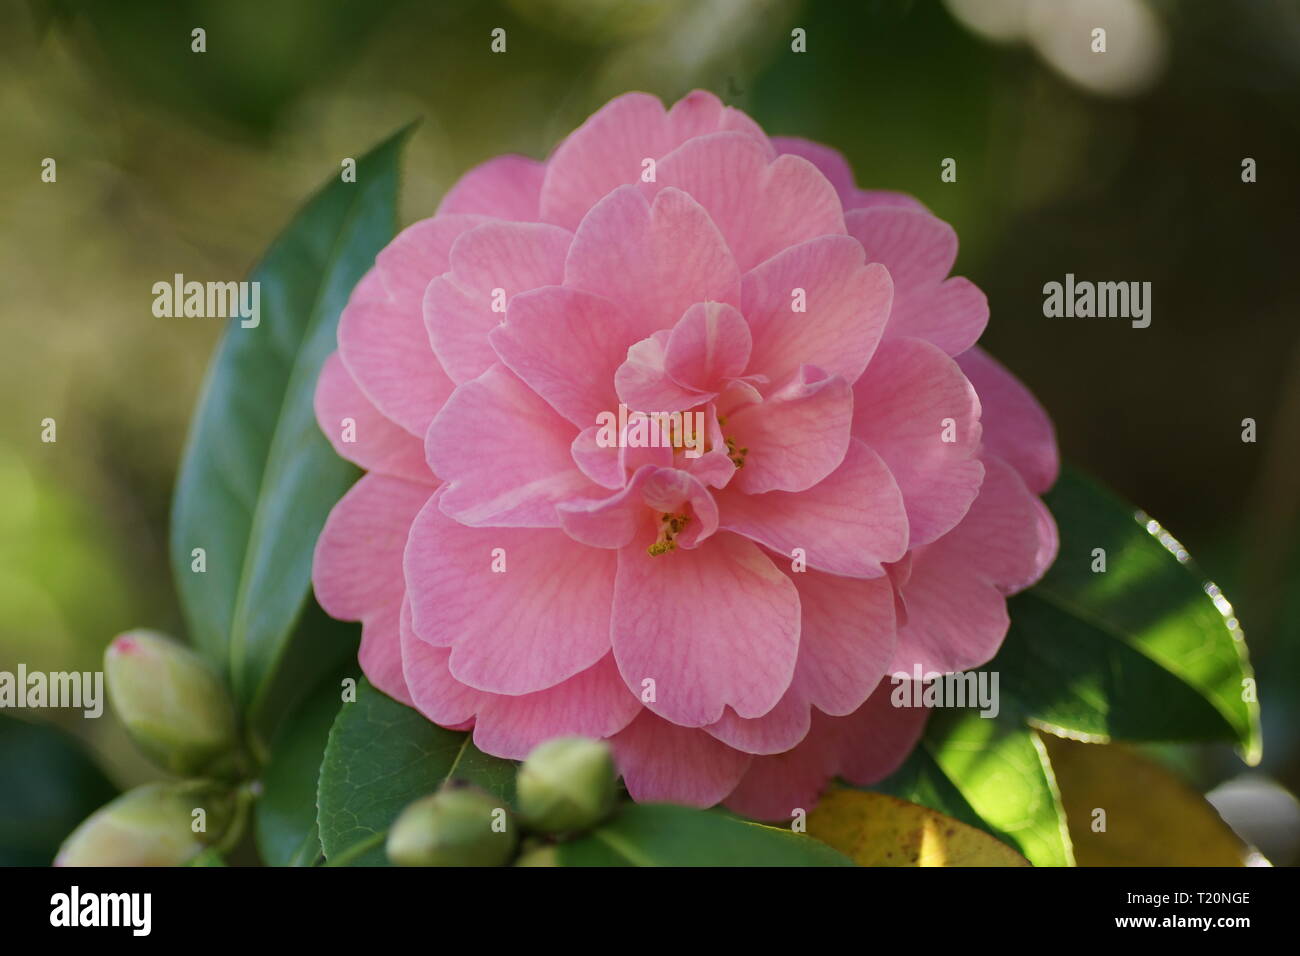 Camellia x williamsii 'Gwavas' Stock Photo